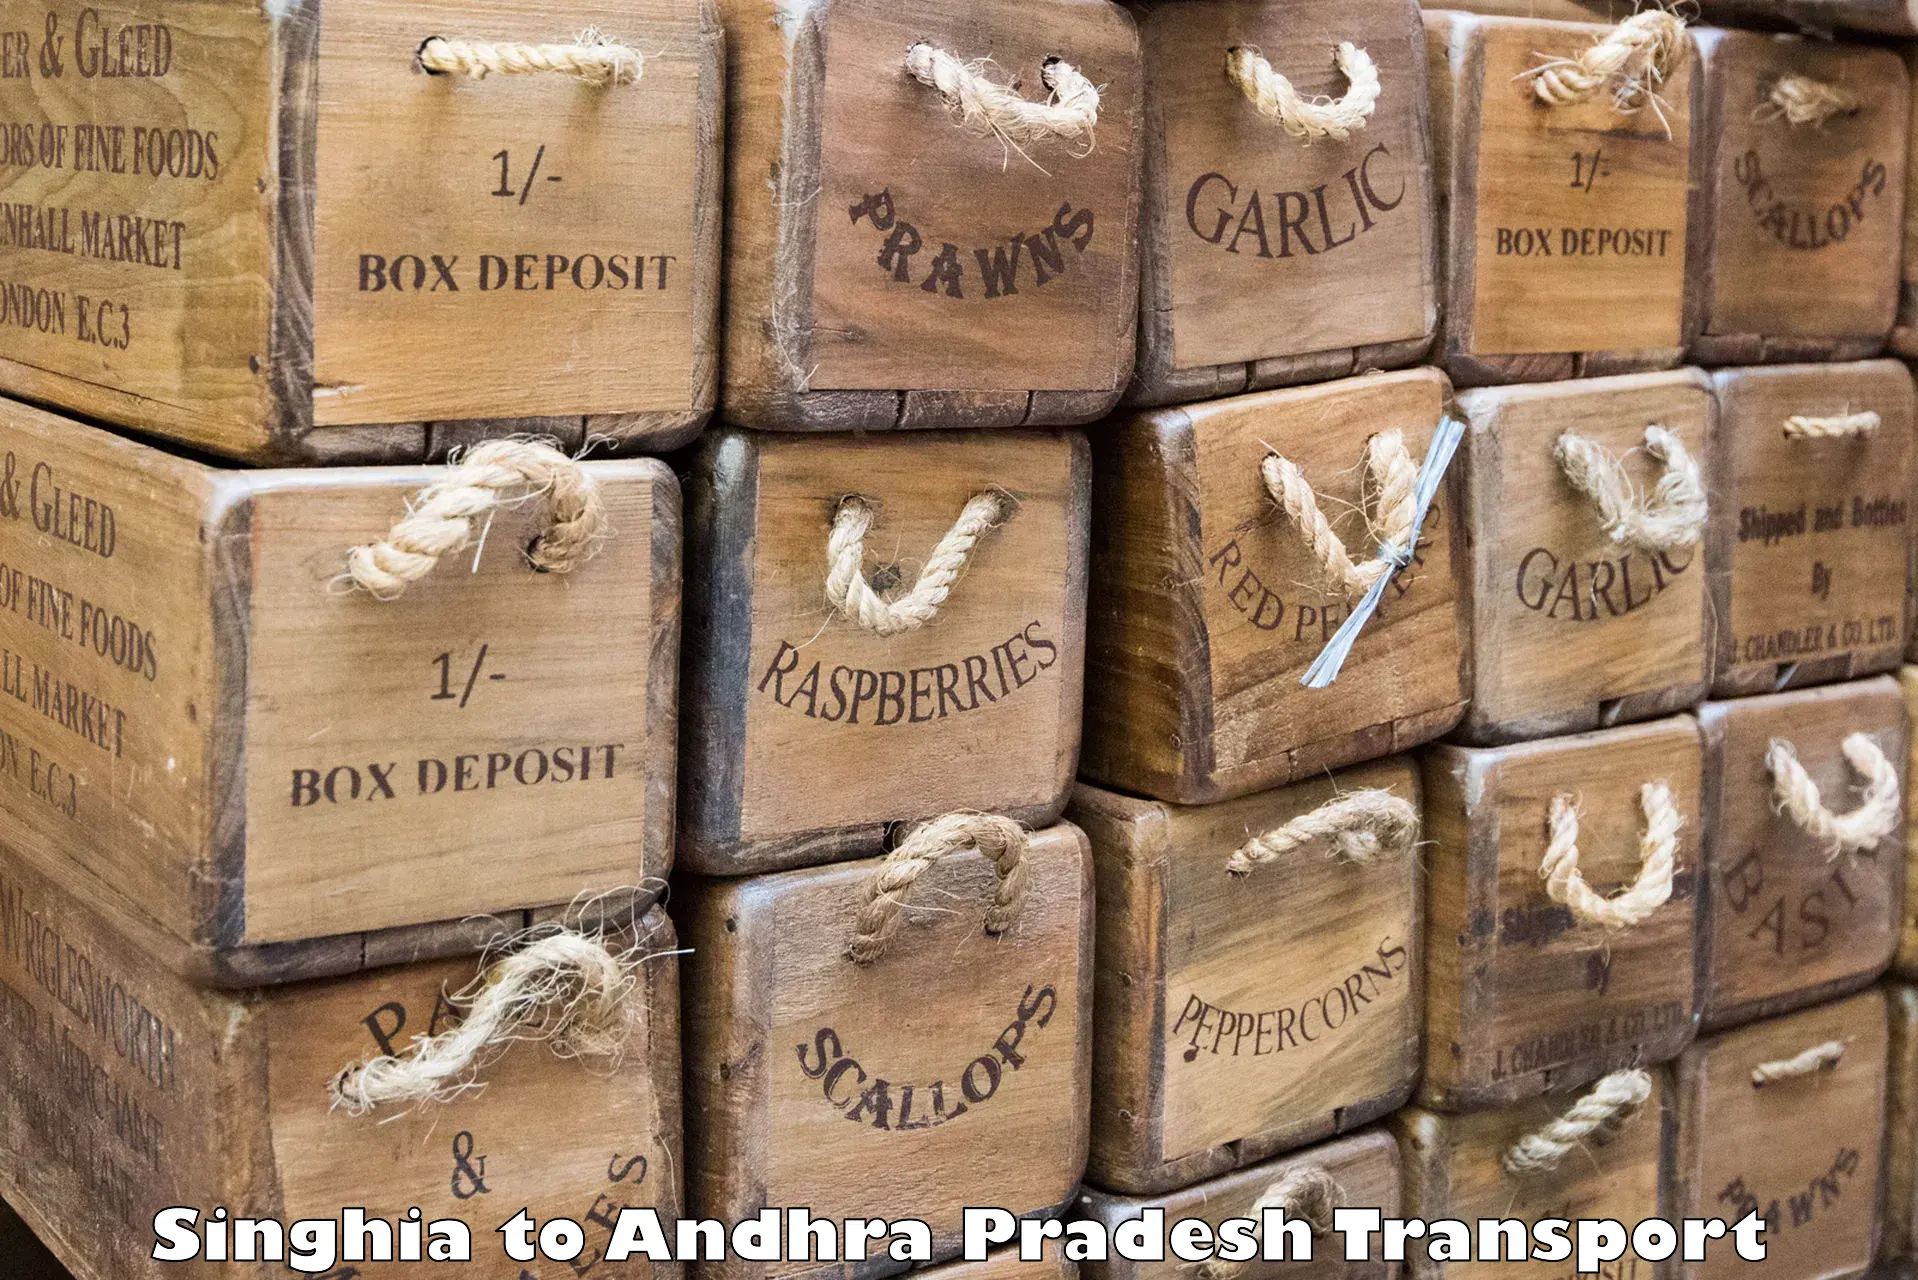 Daily parcel service transport Singhia to Tirupati